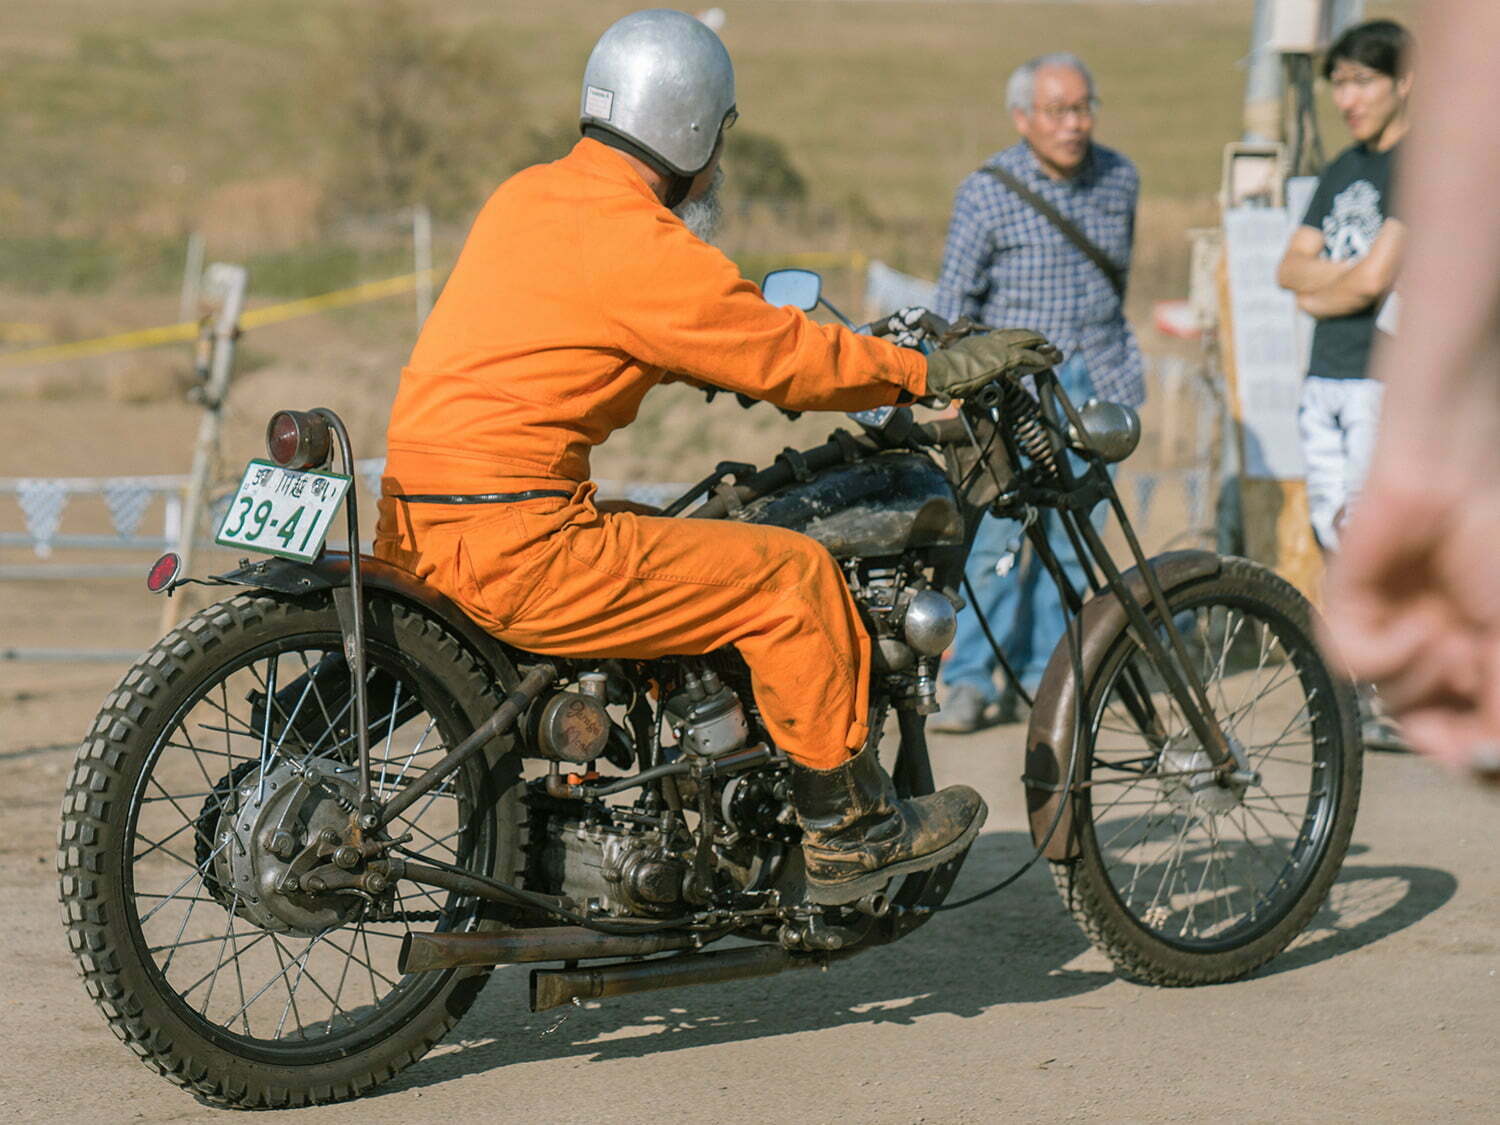 turn of century motorcycle racing